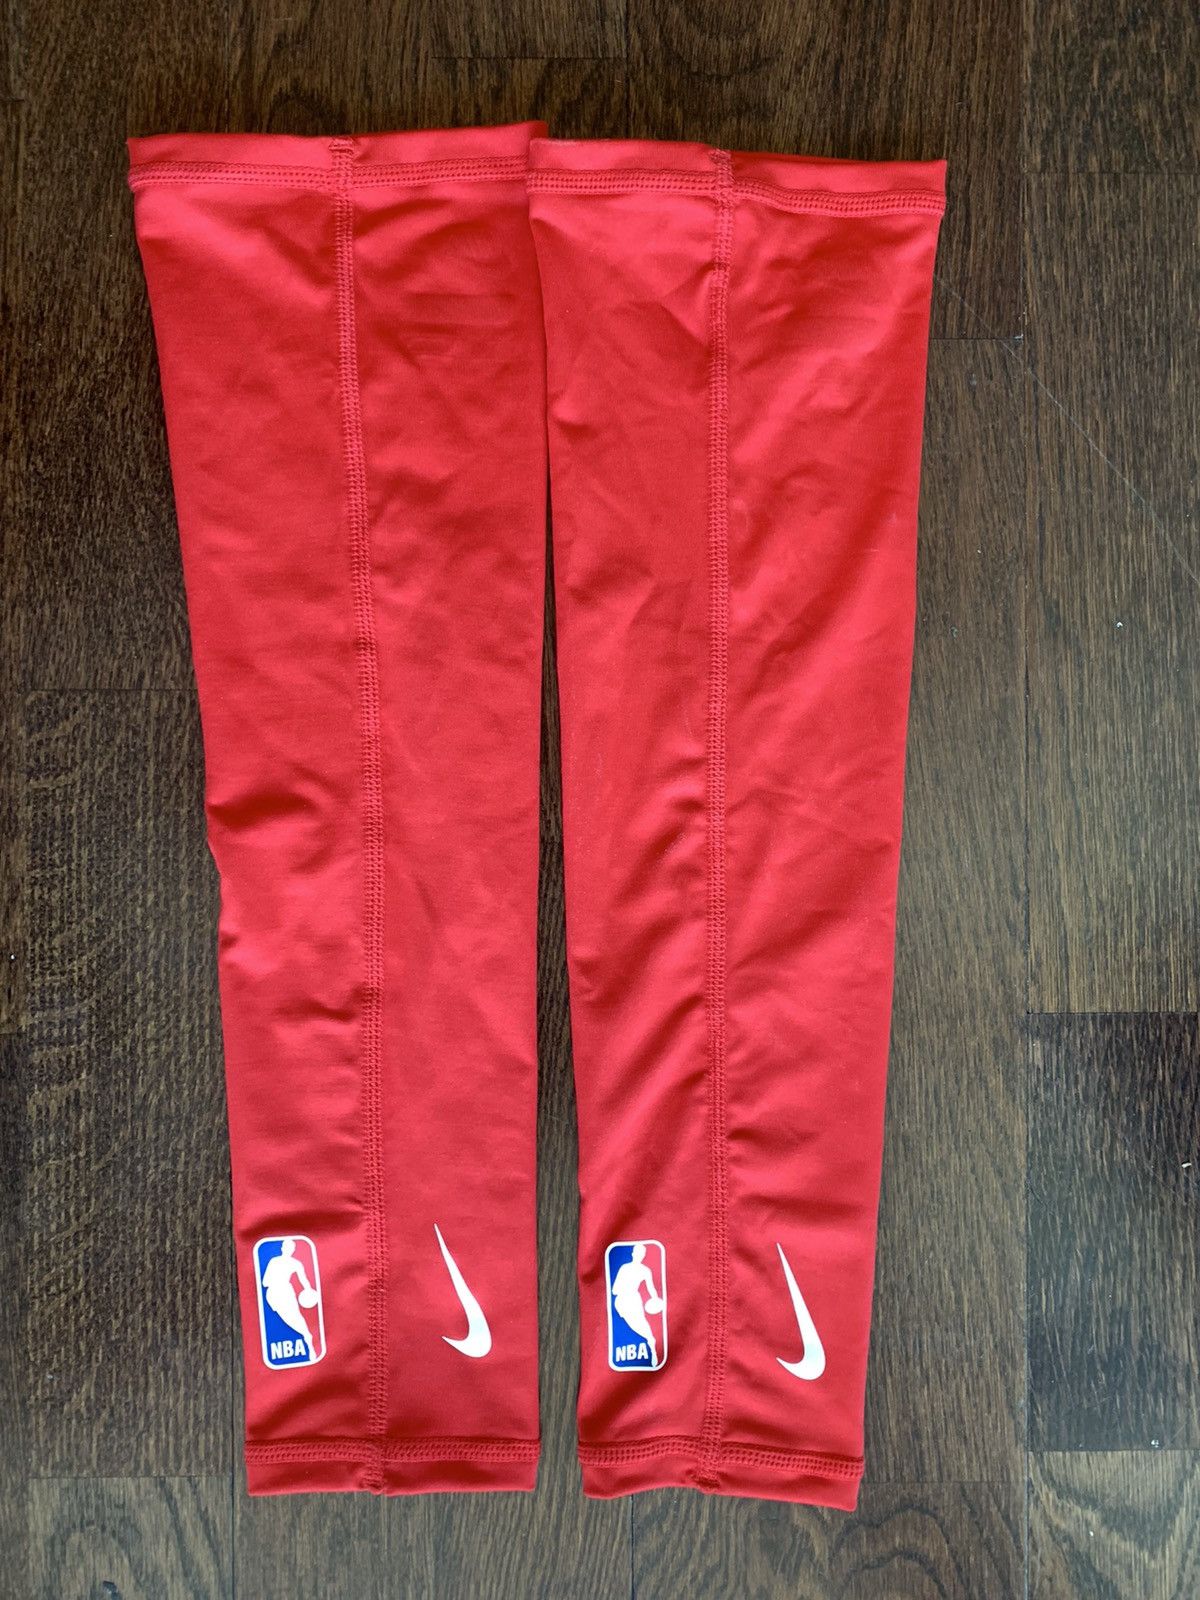 Nike Red NBA Shooter Sleeves